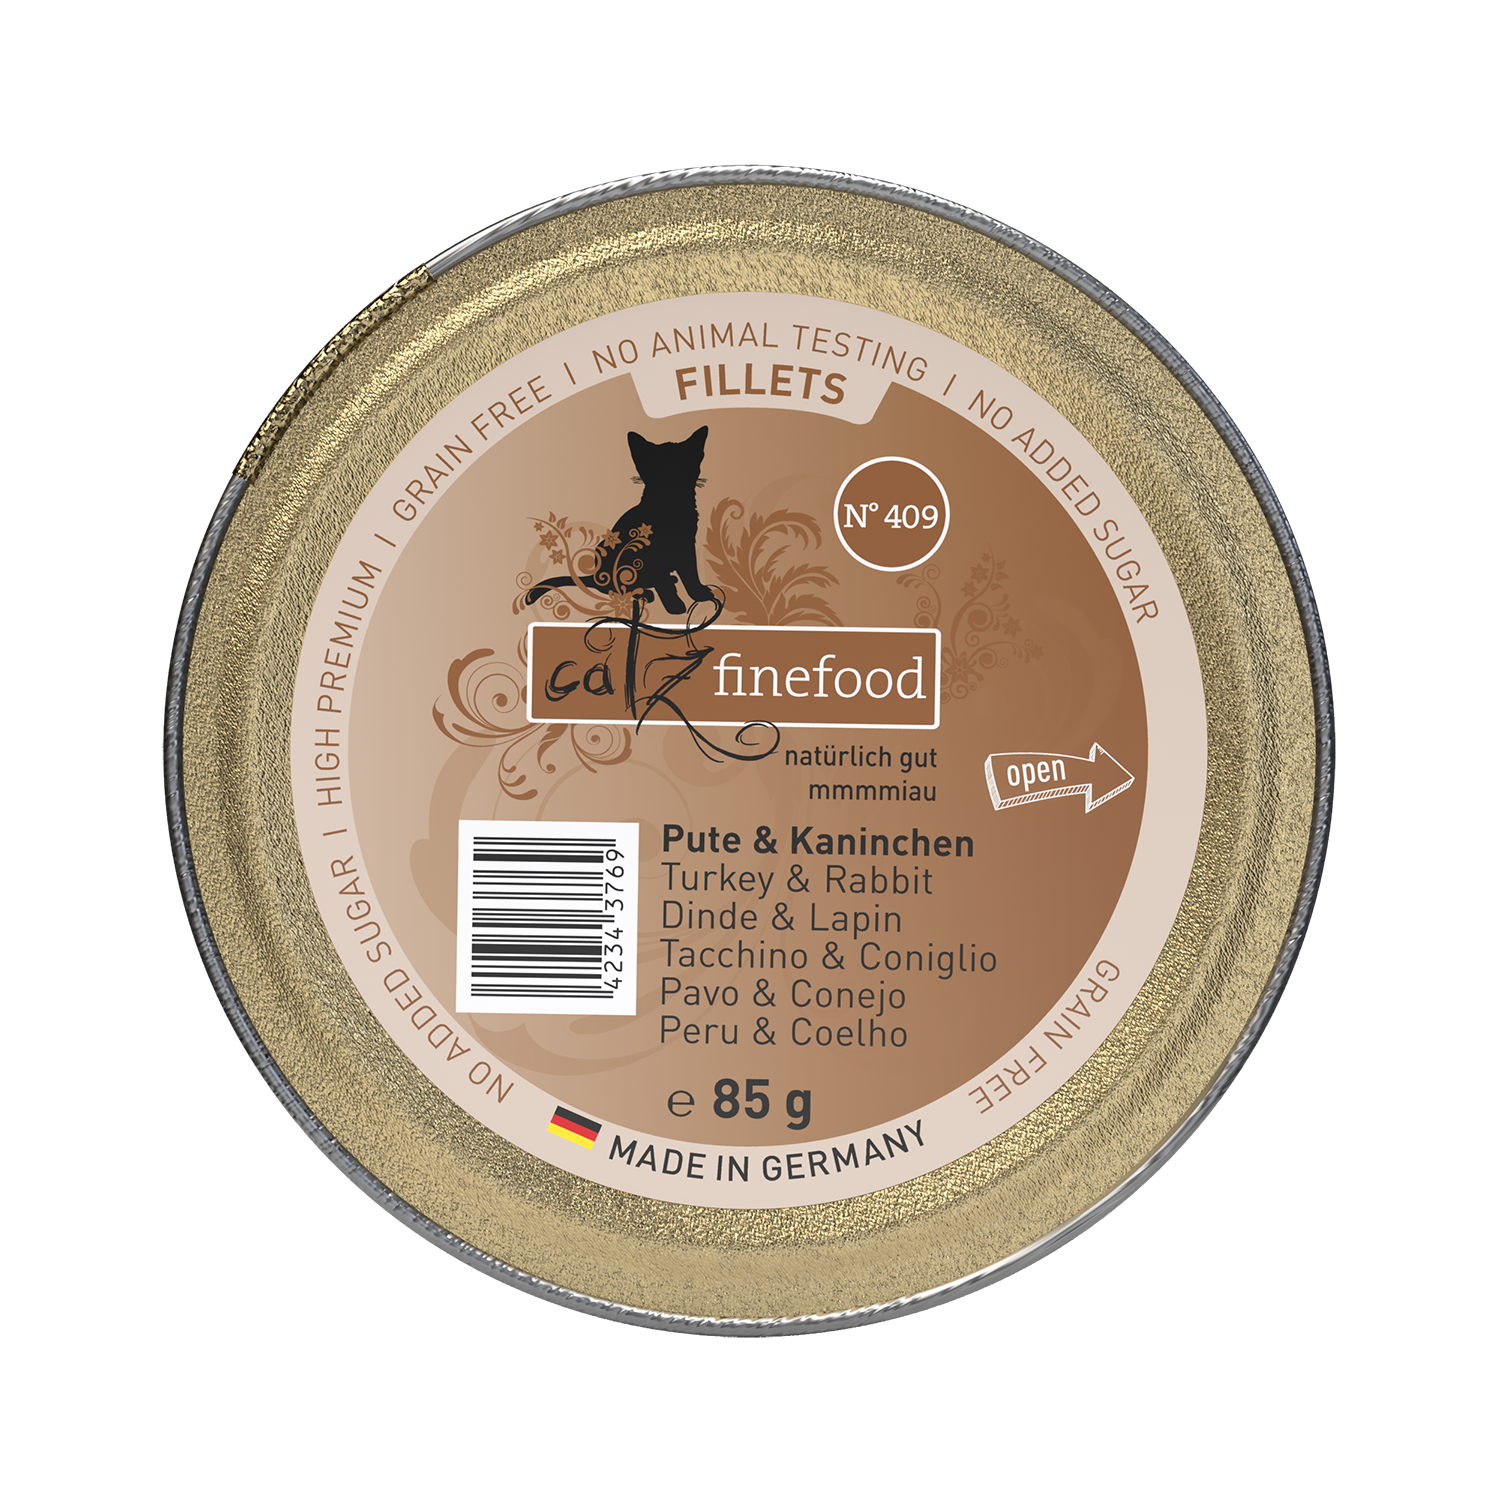 catz finefood Fillets N°409 - Pute, Huhn & Kaninchen in Jelly